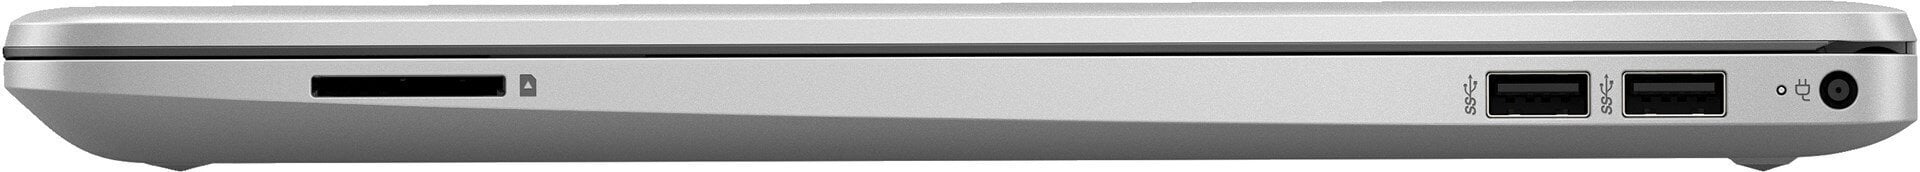 HP 250 G9 (9B993EA) цена и информация | Portatīvie datori | 220.lv